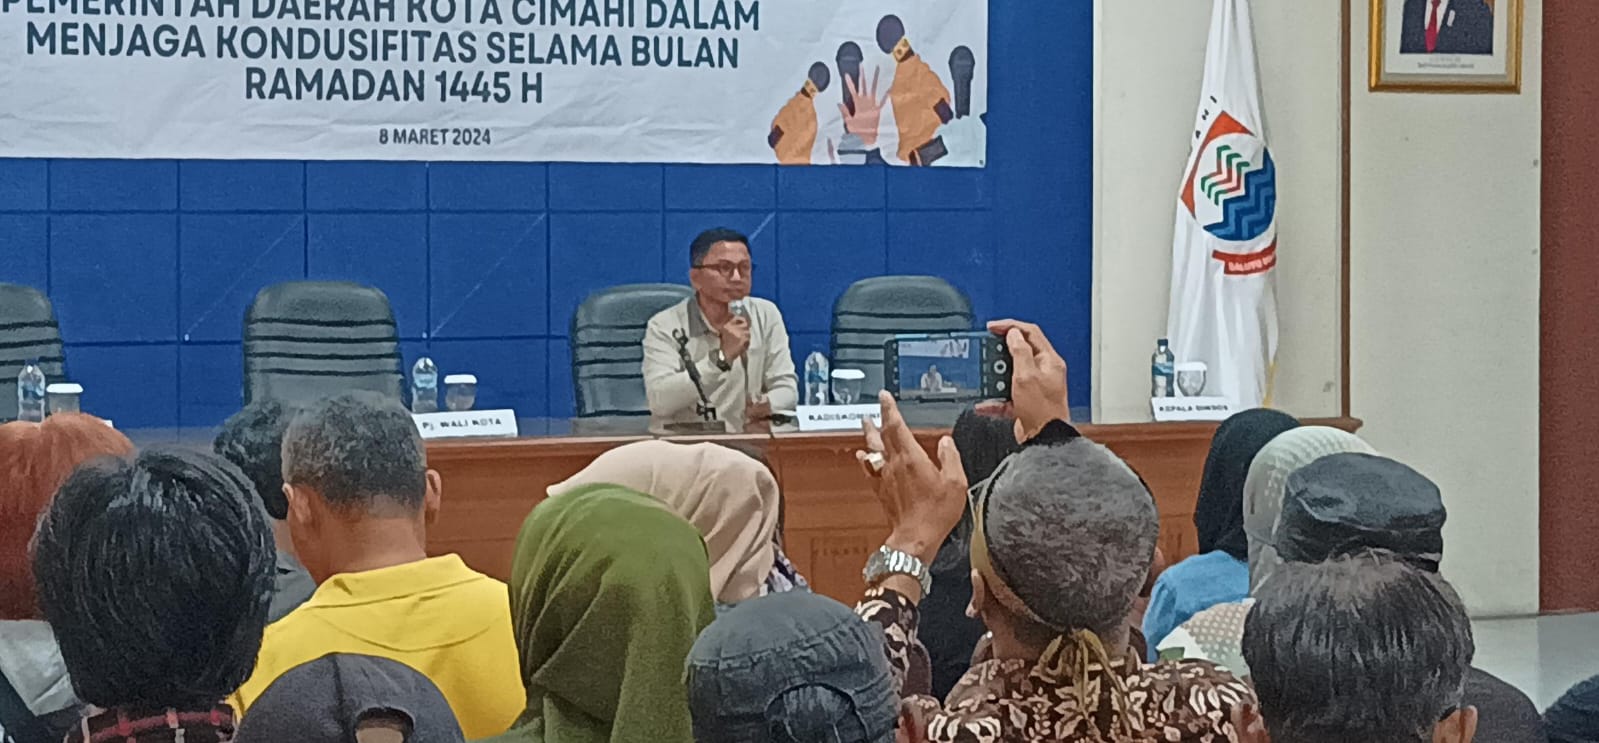 Diskominfo Kota Cimahi Harapkan Insan Pers Kondusif Selama Ramadhan